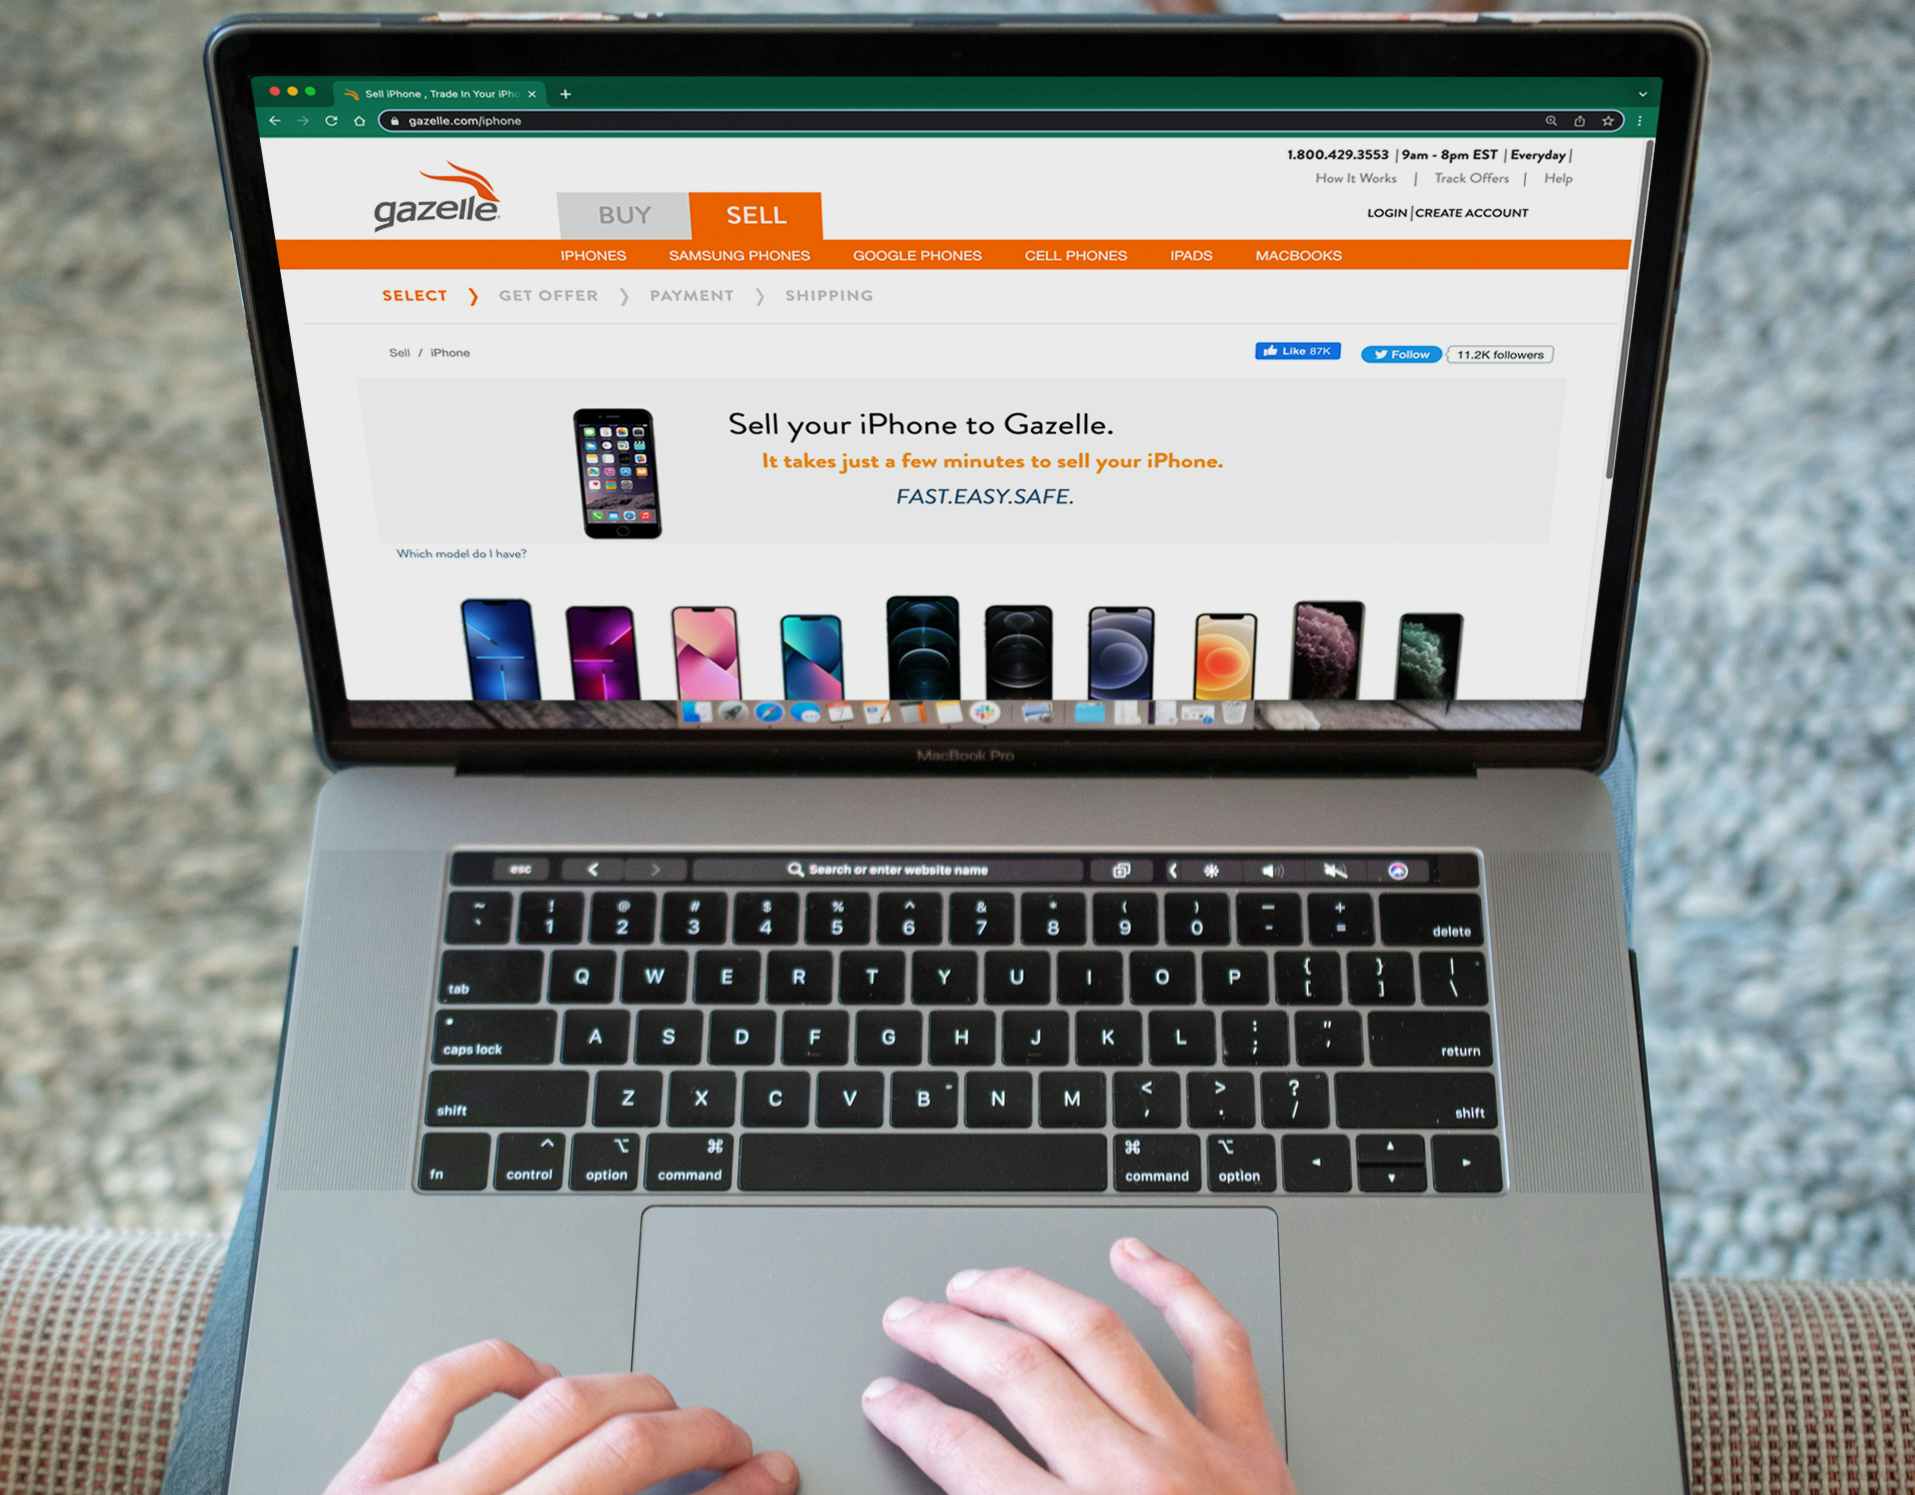 macbook laptop showing gazelle iphone trade-in service 